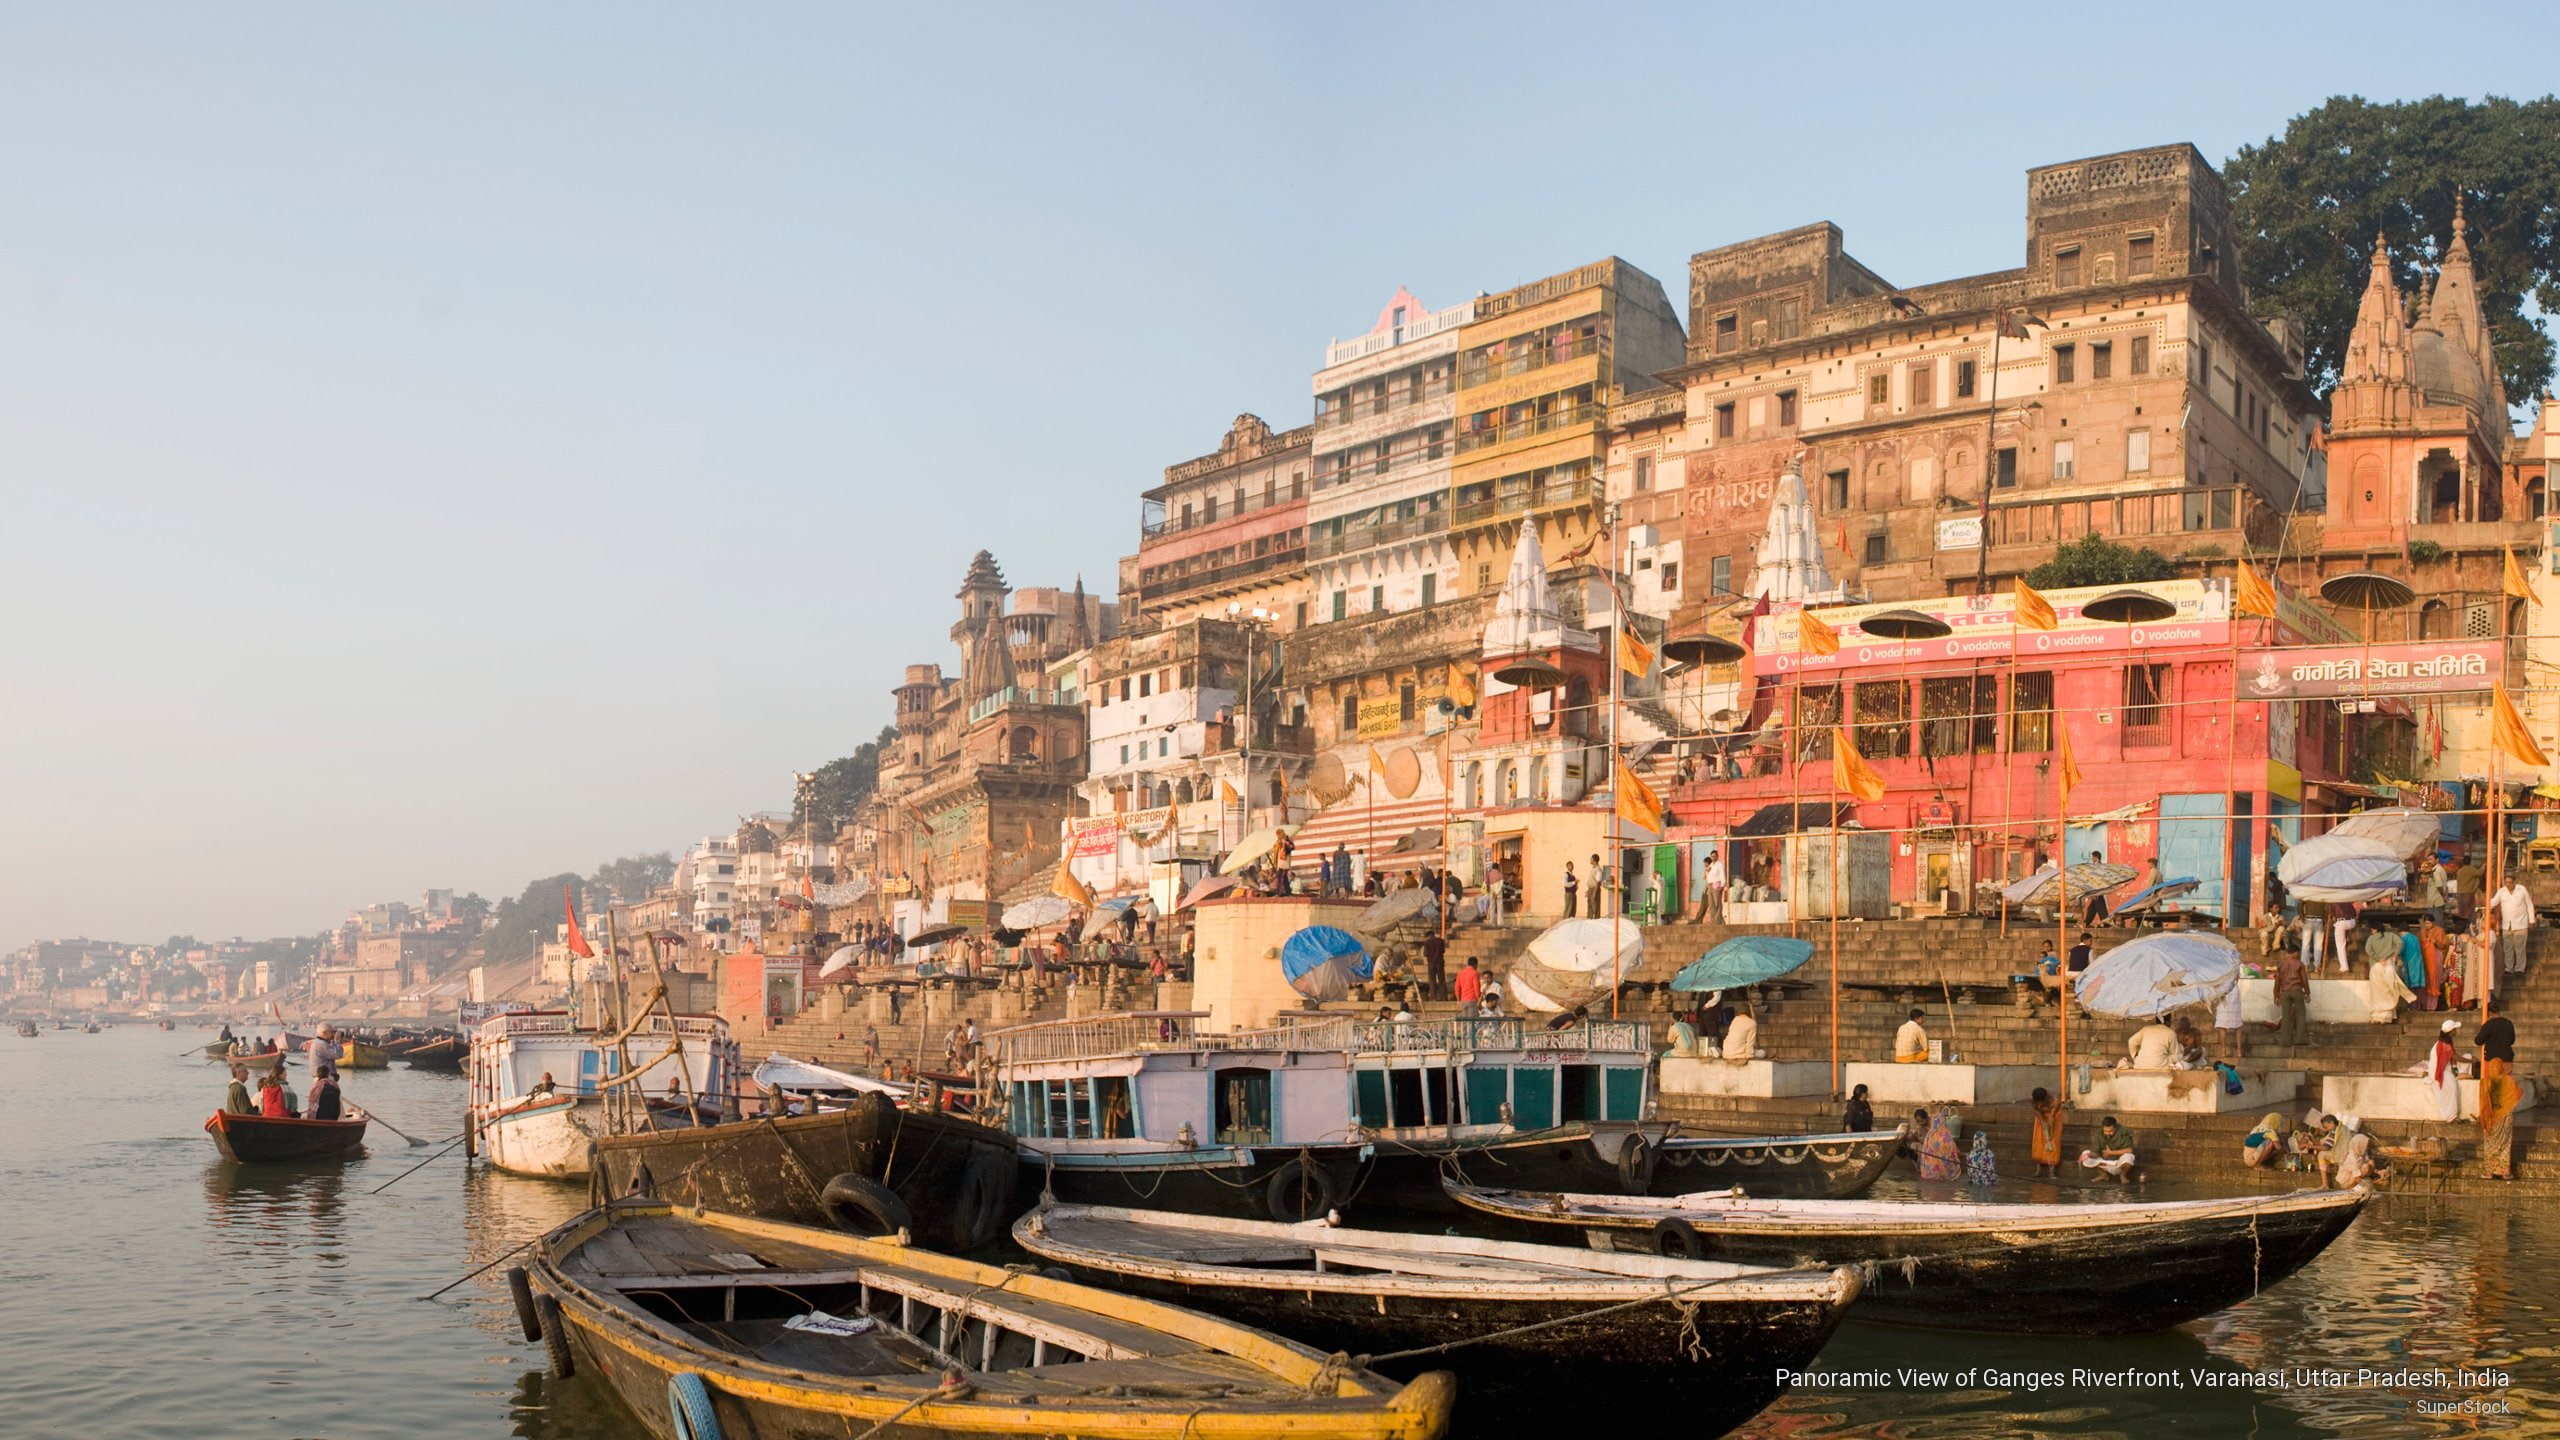 Panoramic View of Ganges Riverfront, Varanasi, Uttar Pradesh, India